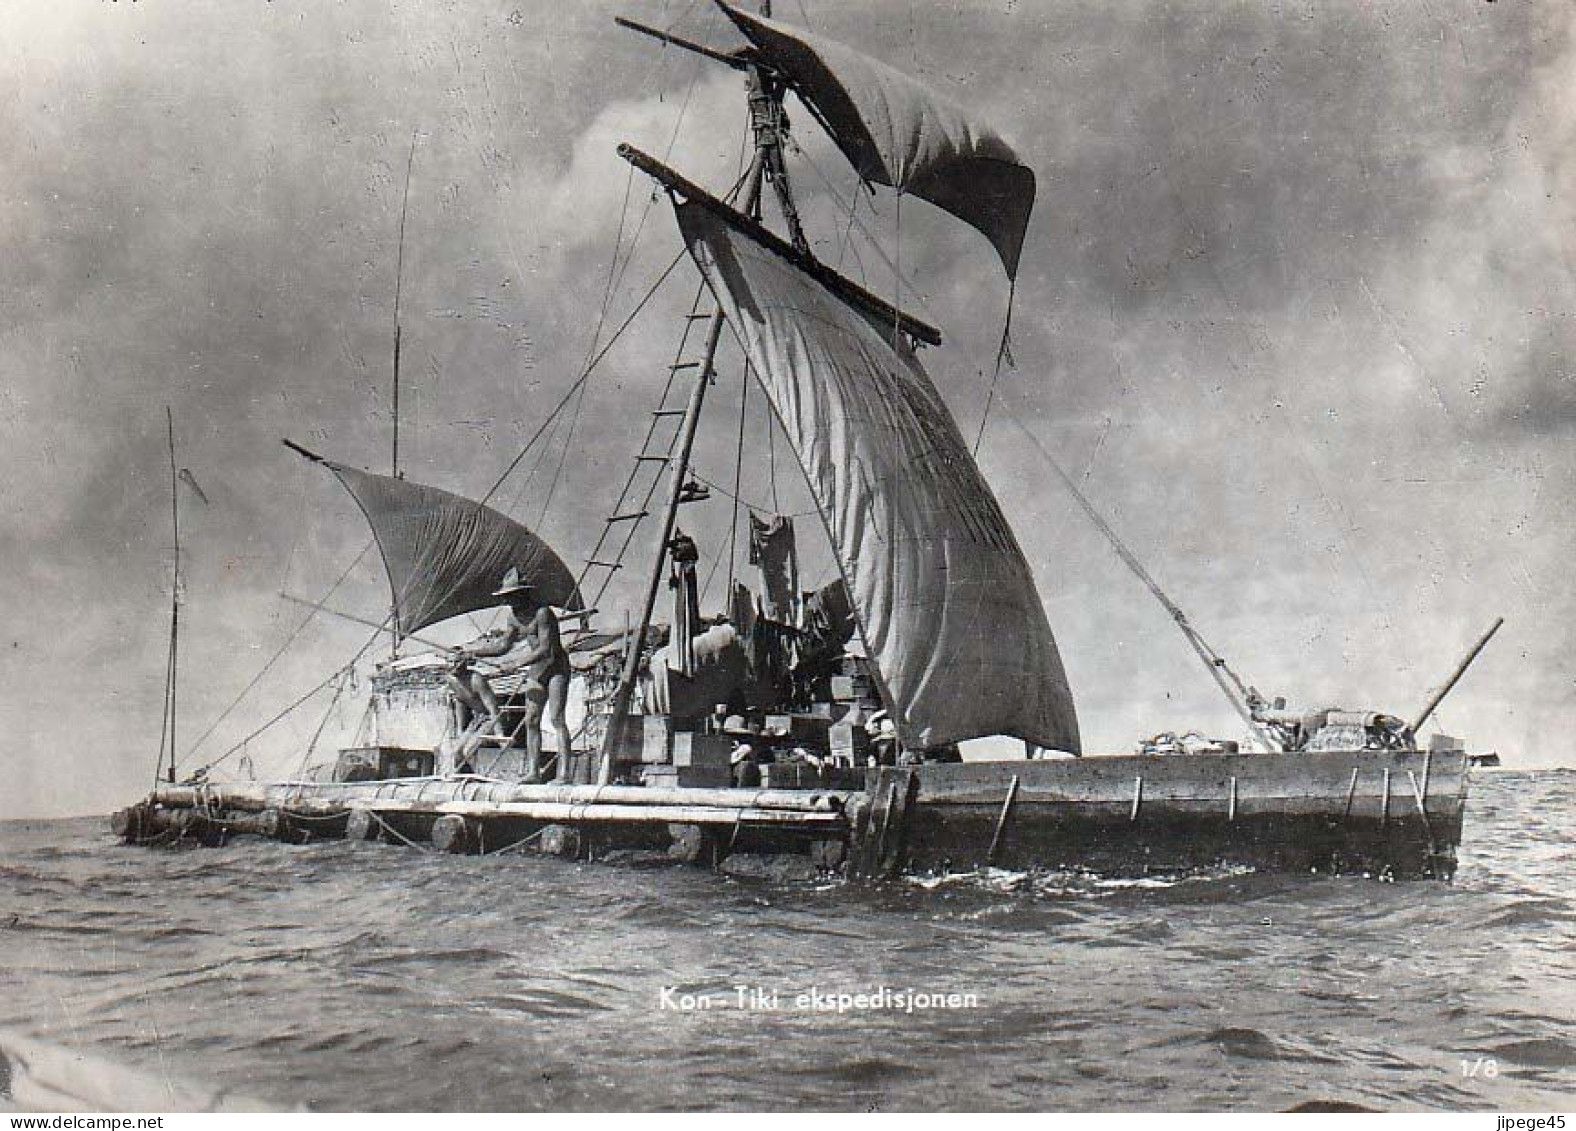 CPM - Kon-Tiki - Segelboote